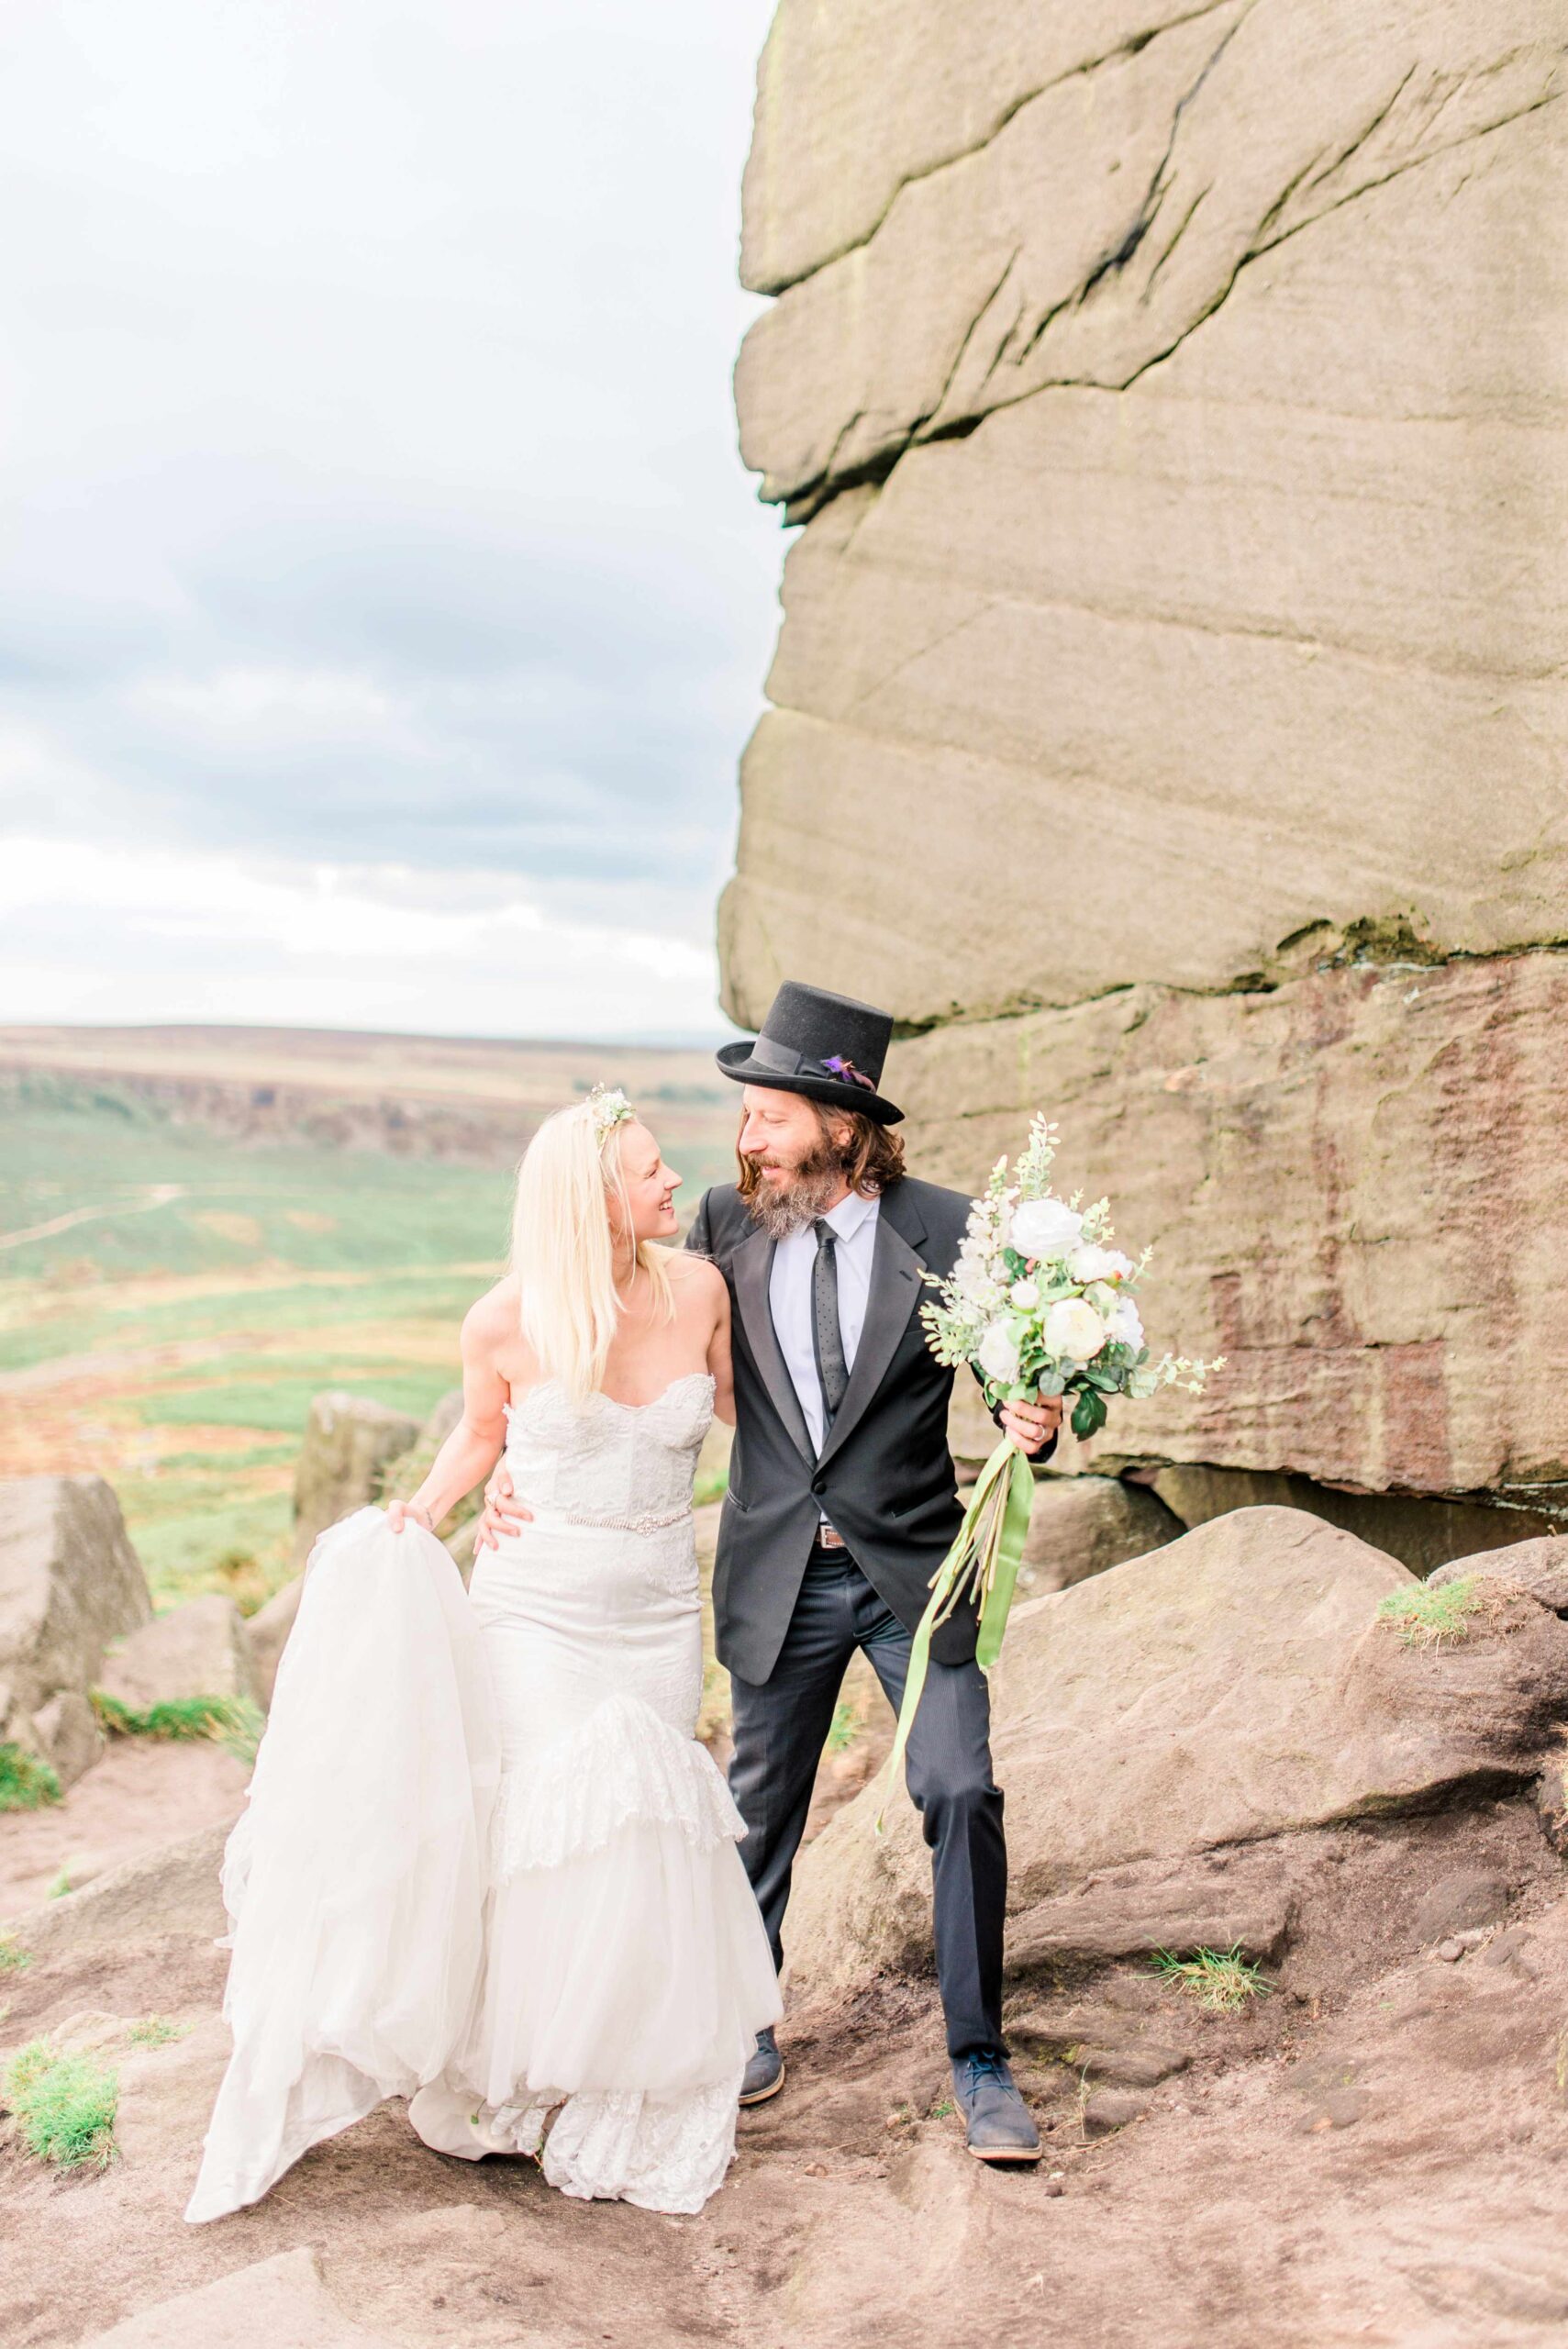 Manchester, Indiana, Wedding Photographer mountains hathersage goyt valley